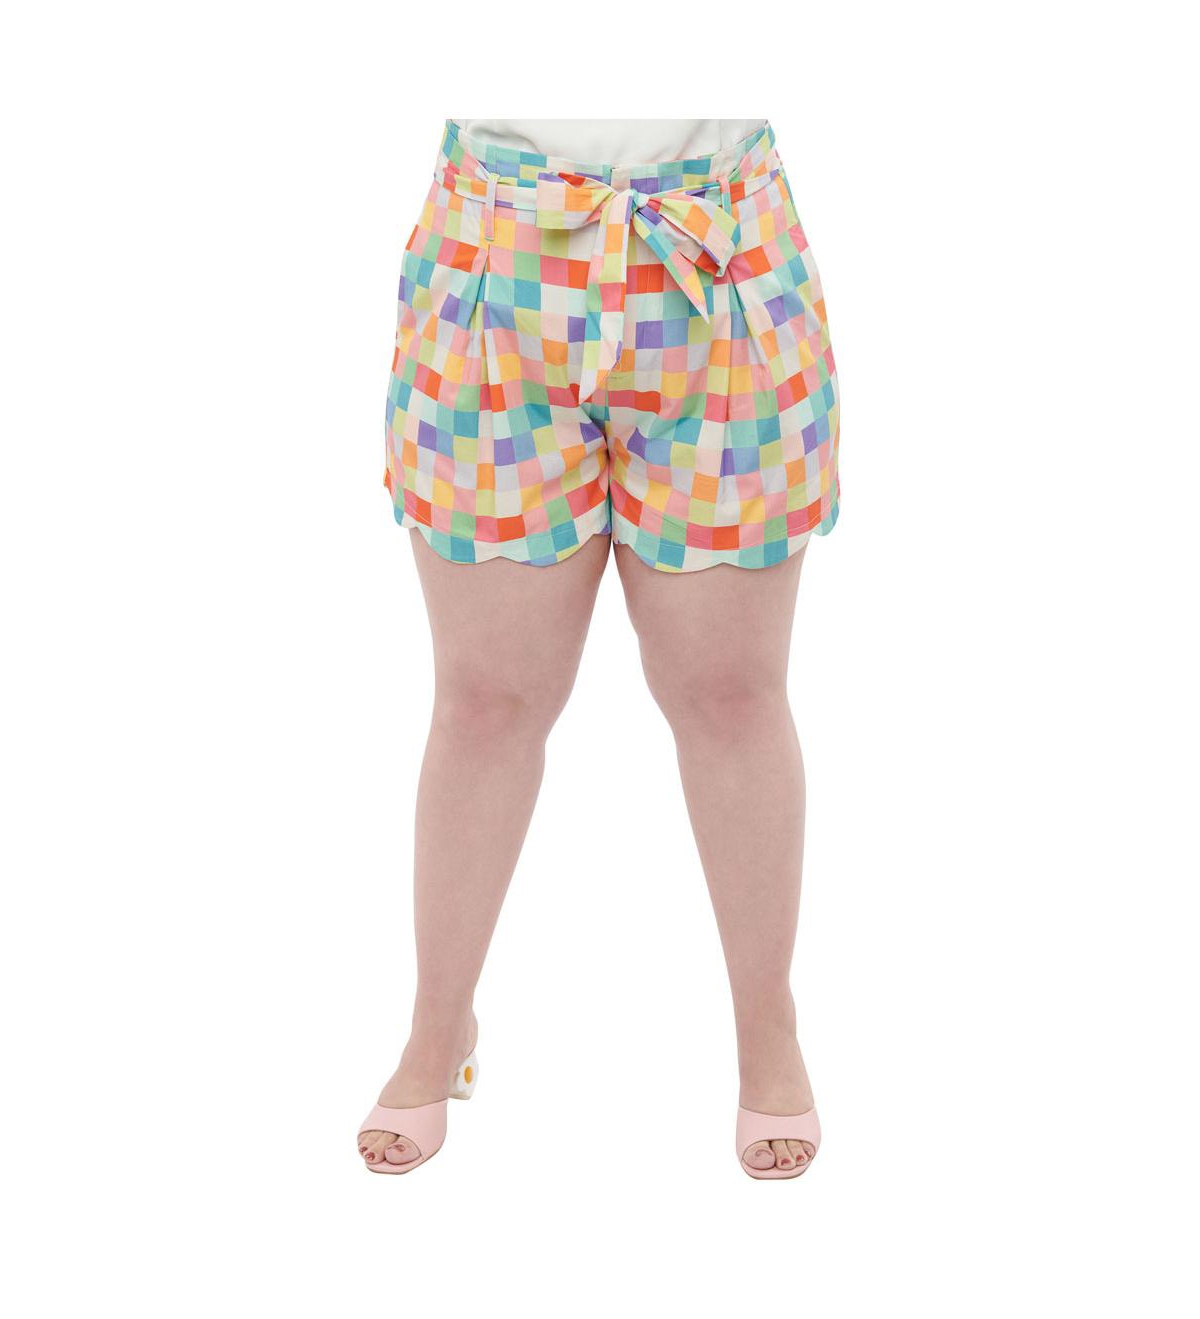 Plus Size 1940s High Waist Shorts - Rainbow gingham